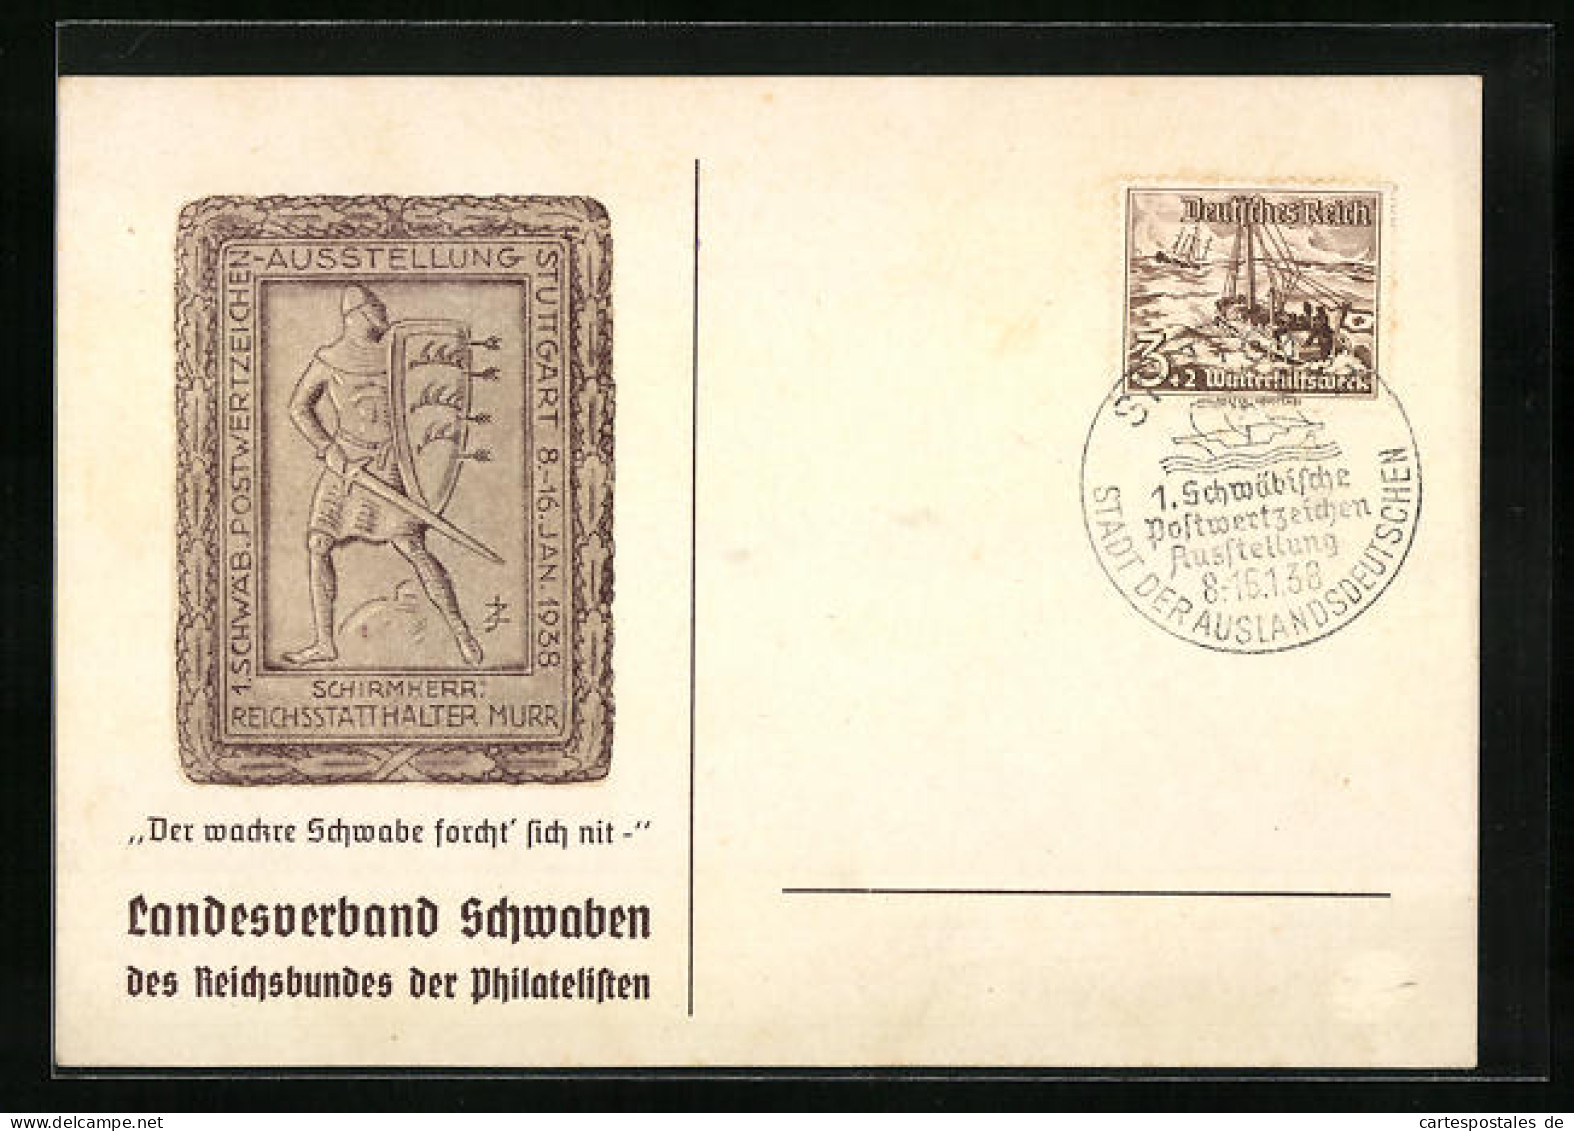 AK Stuttgart, 1. Schwäb. Postwertzeichen-Ausstellung 1938  - Timbres (représentations)